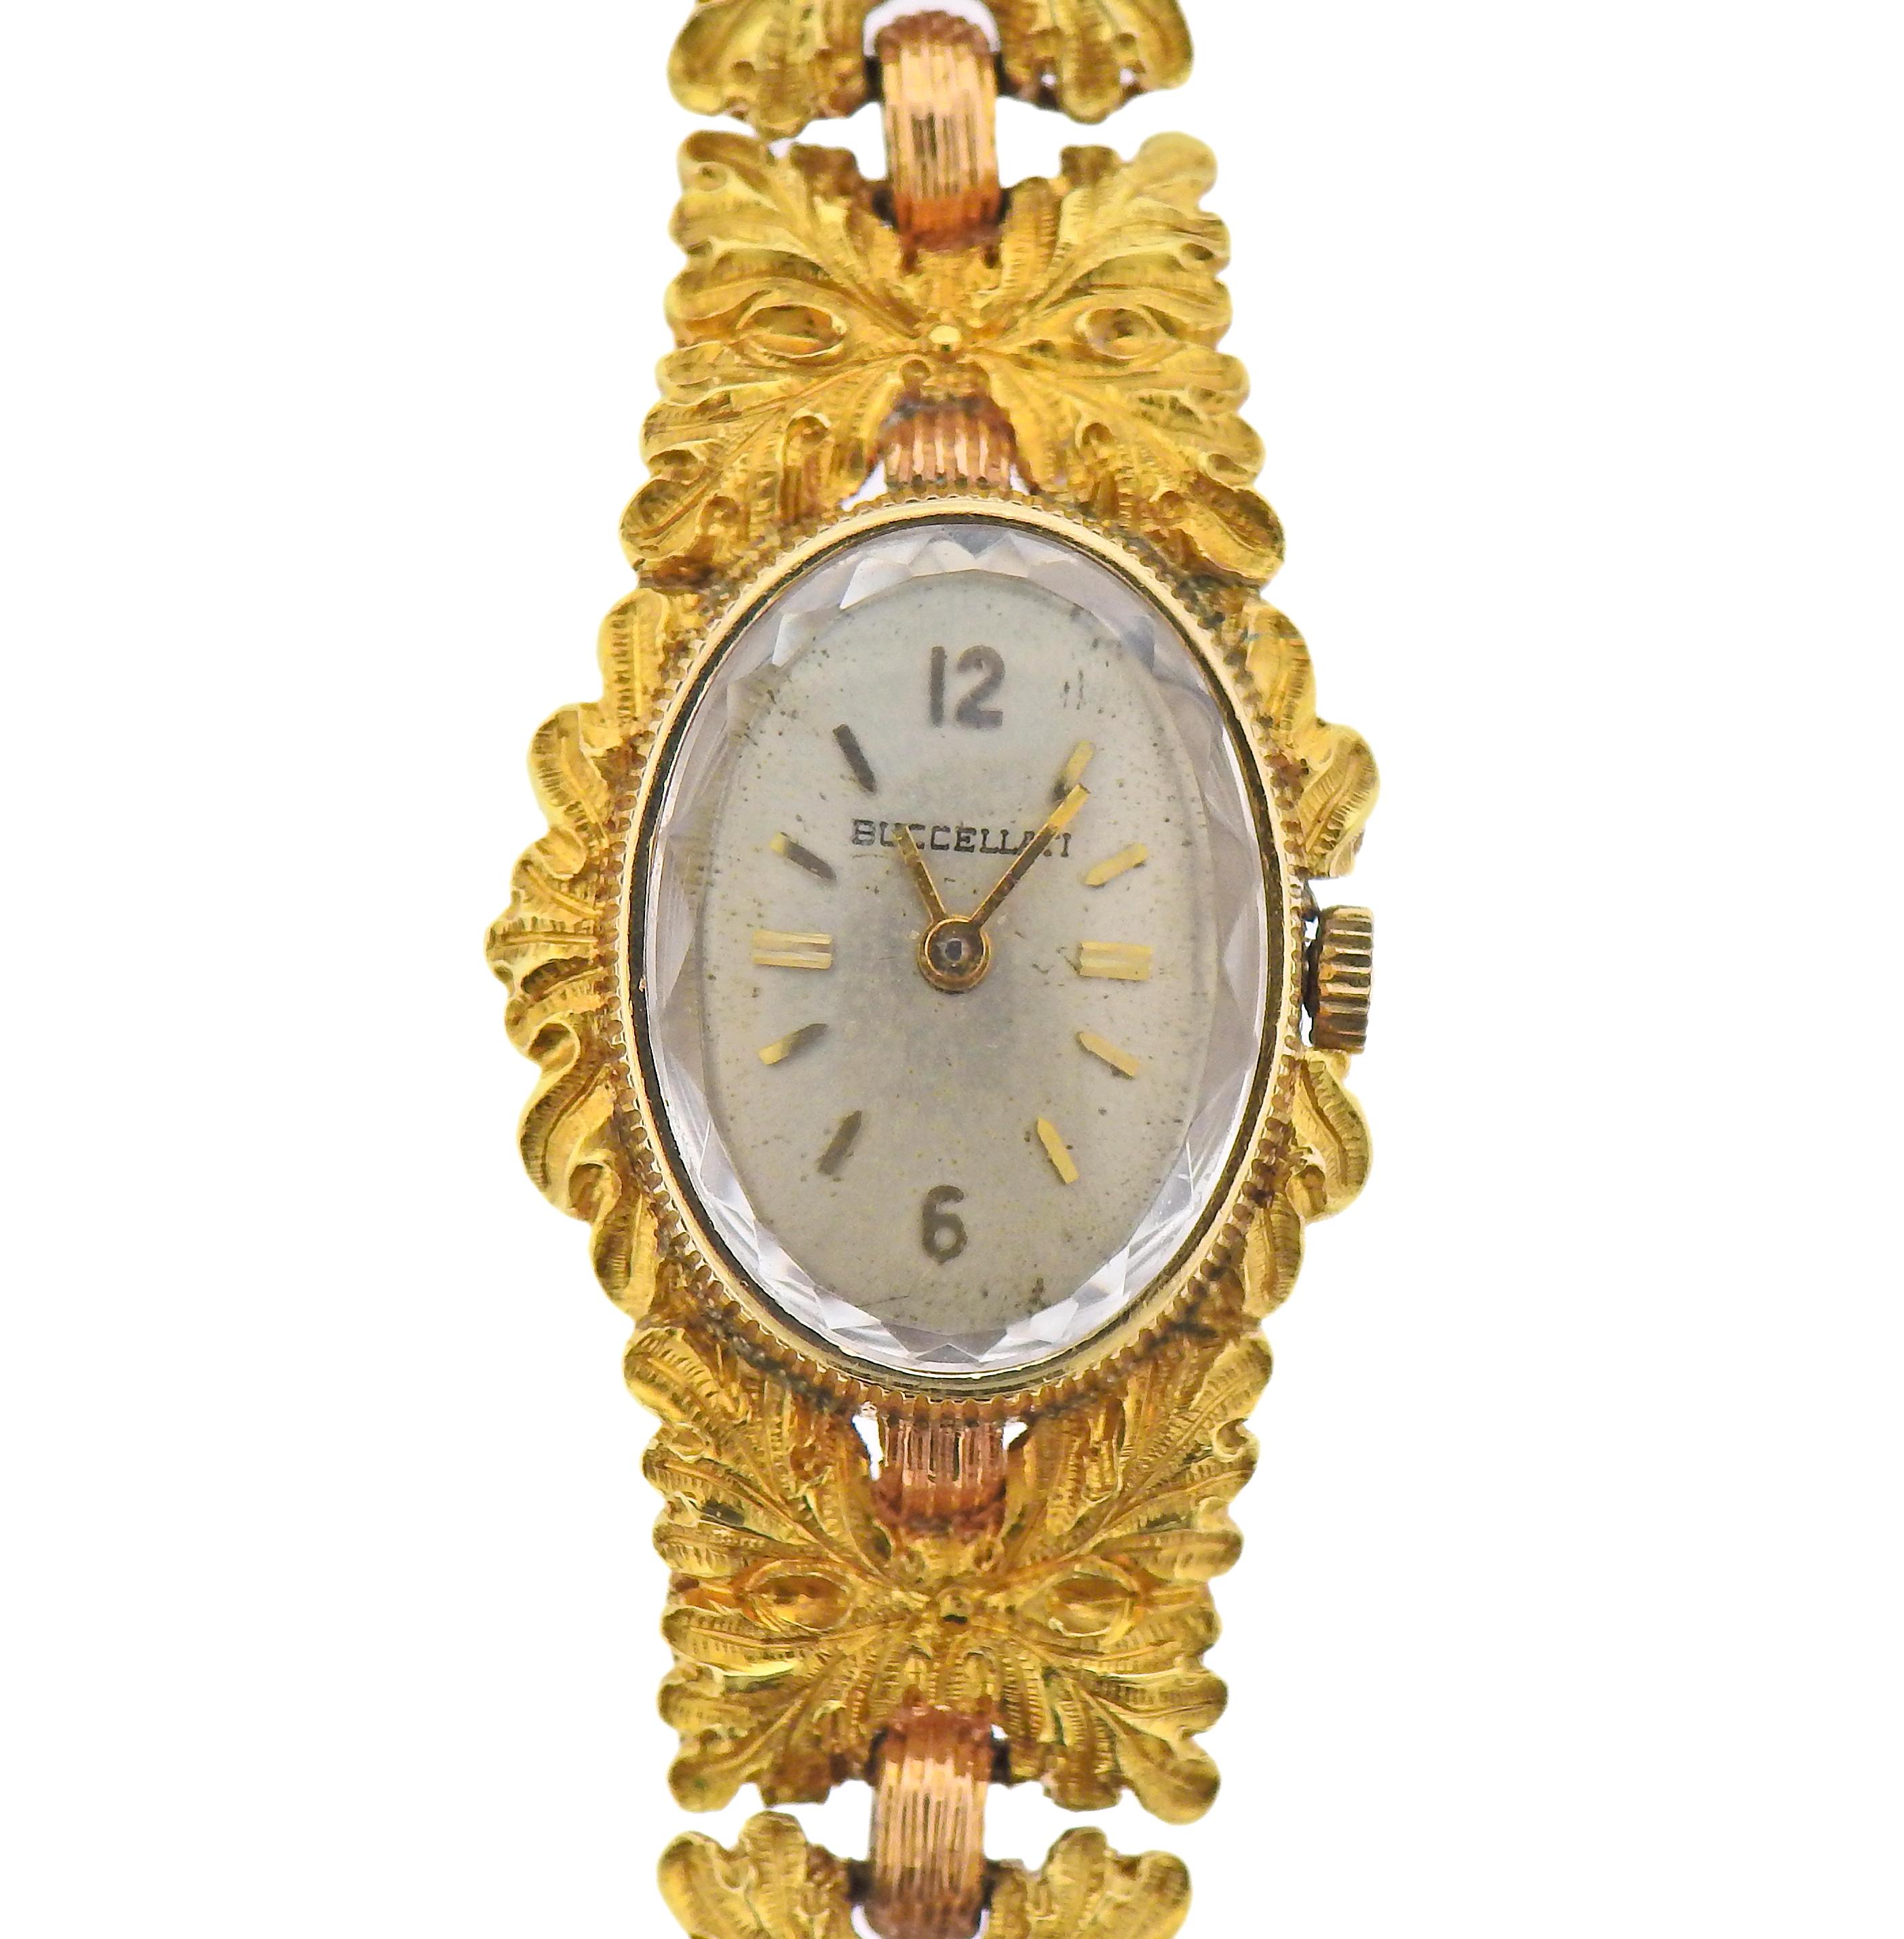 Vintage 18k gold watch bracelet by Buccellati. Manual wind movement. Case measures 19mm x 20mm. Bracelet is 6.25